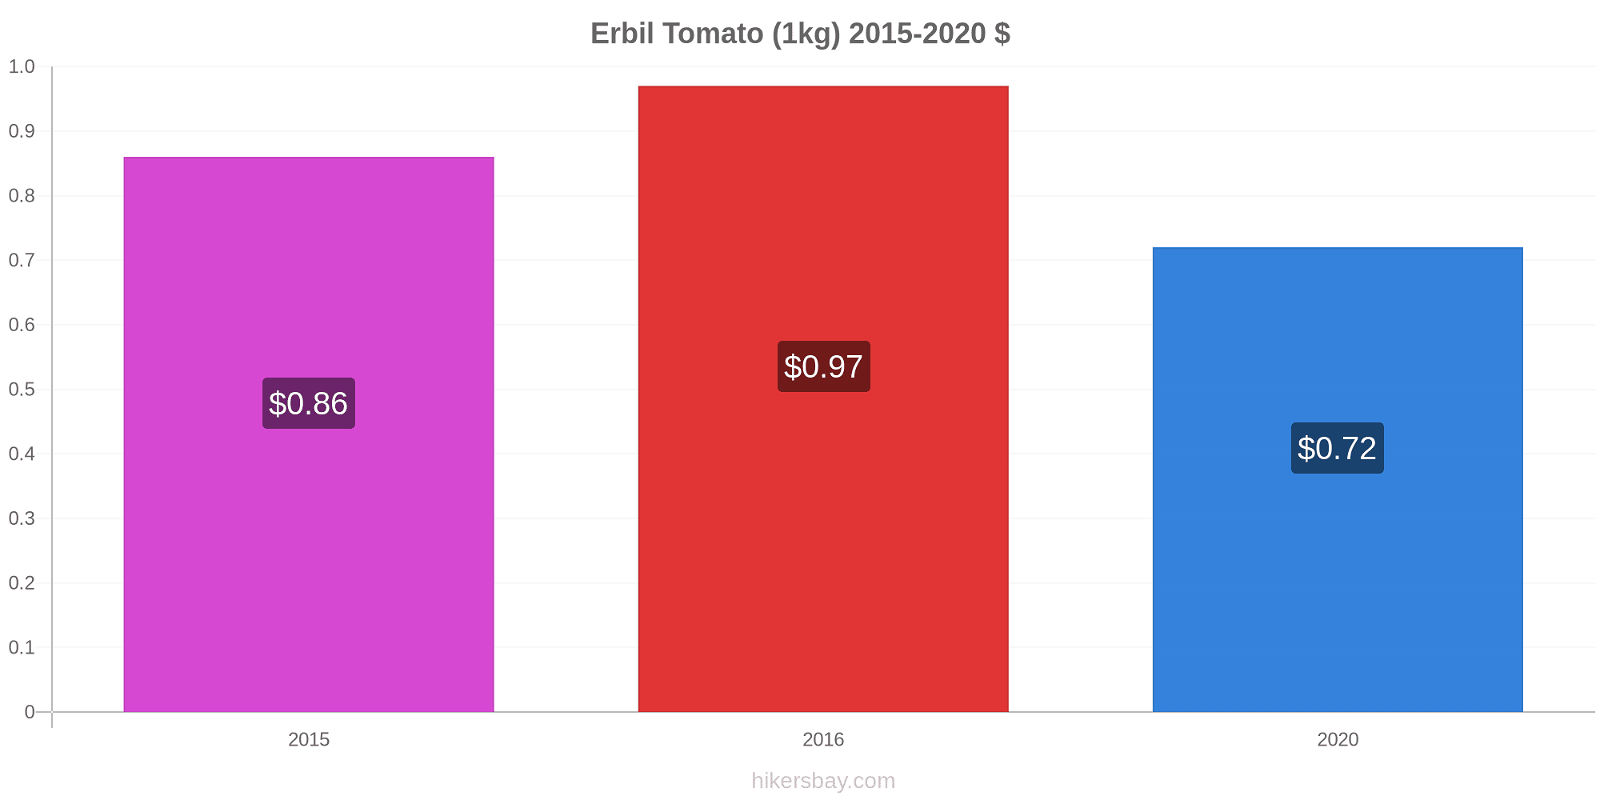 Erbil price changes Tomato (1kg) hikersbay.com